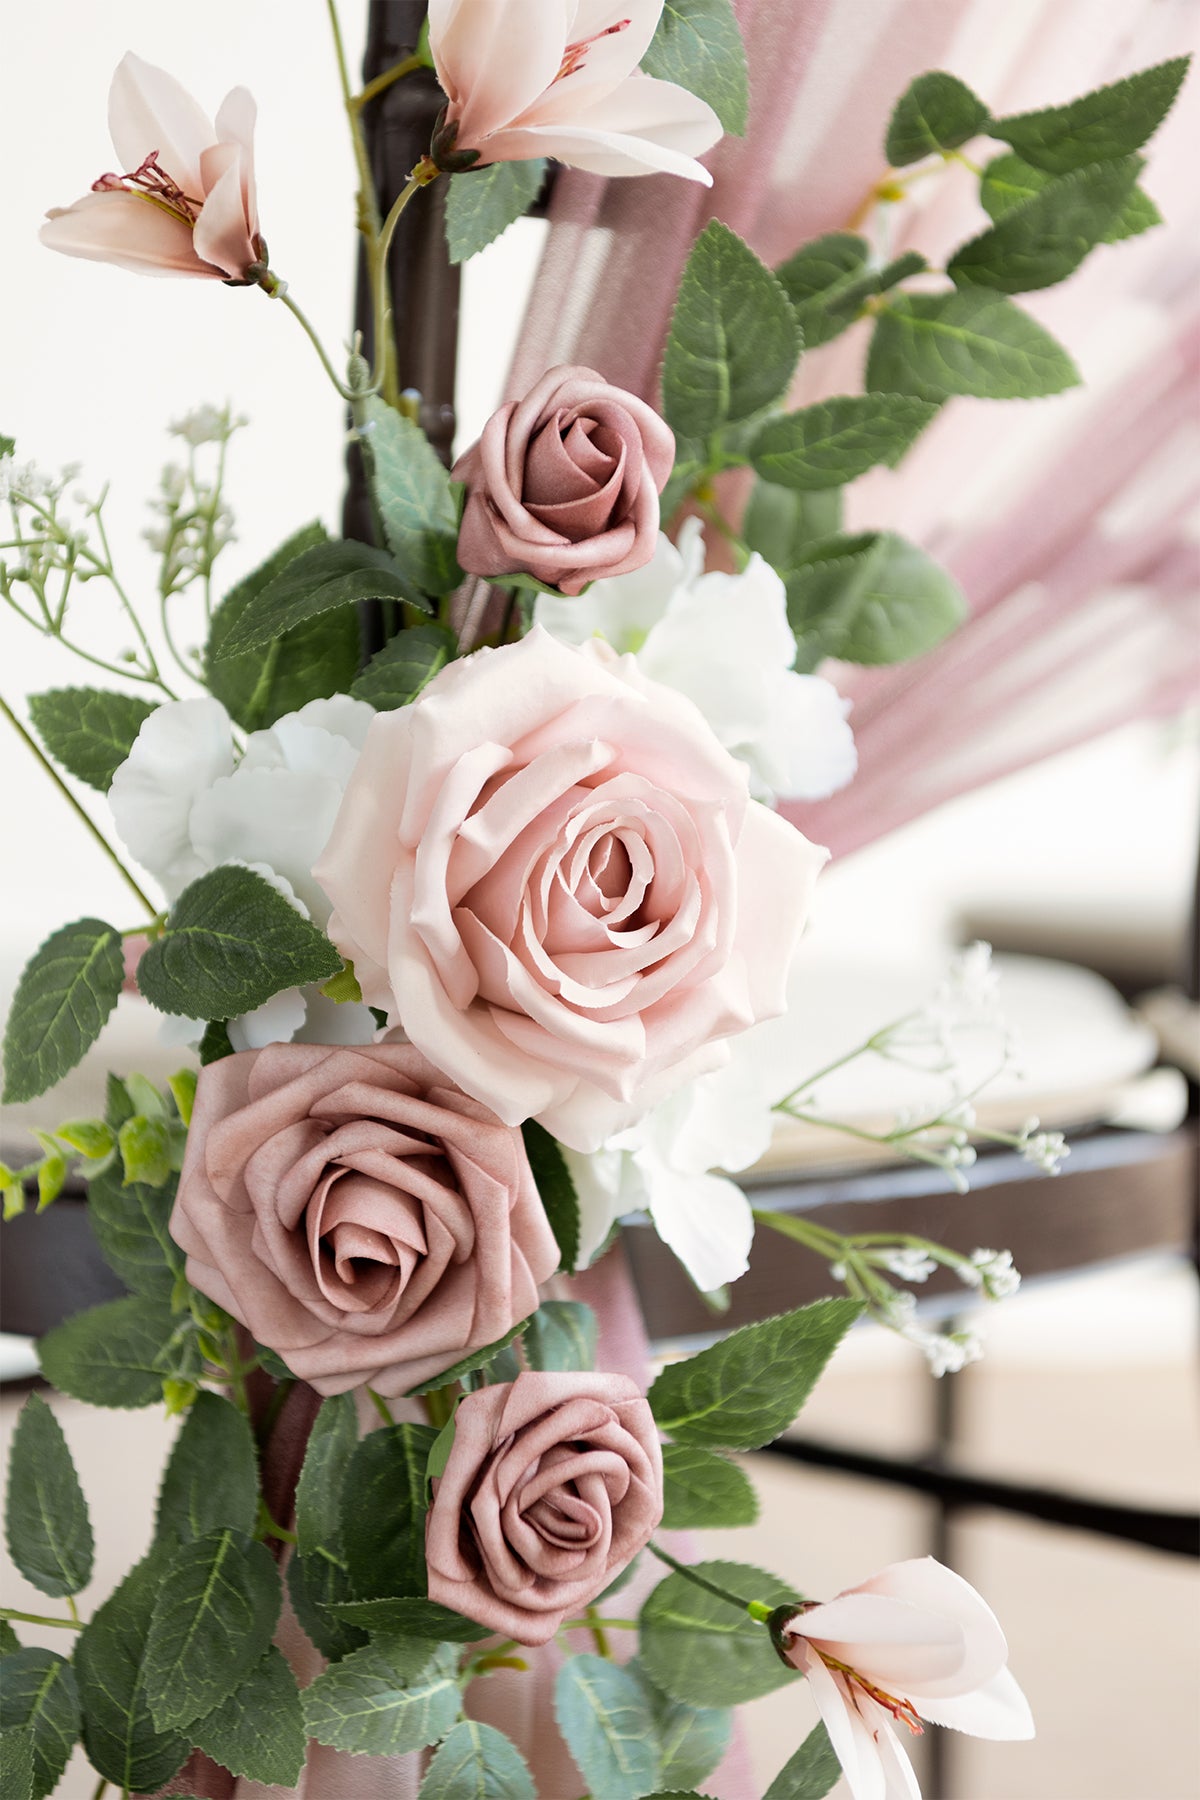 Wedding Aisle Chair Flower Decoration in Dusty Rose & Cream